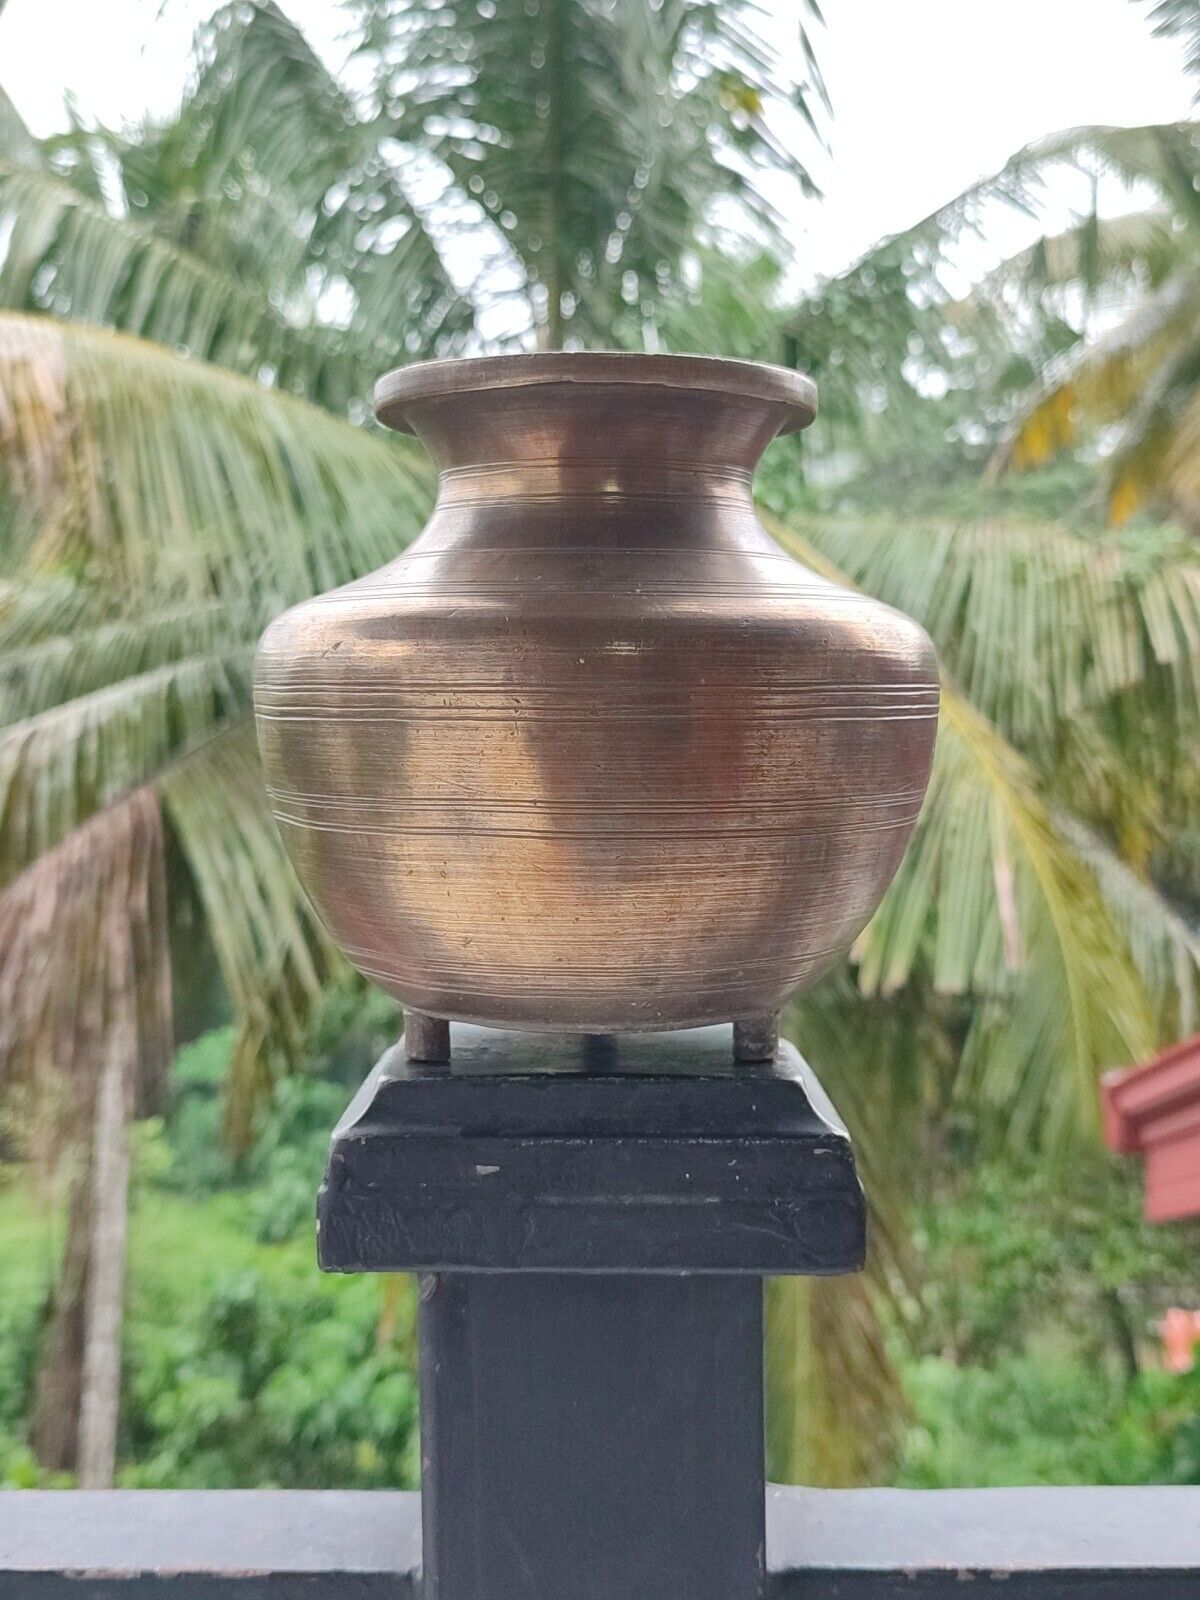 Rare Antique Water Pot Round Shape Brass Vessel Collectible Kitchenware / 1140g 